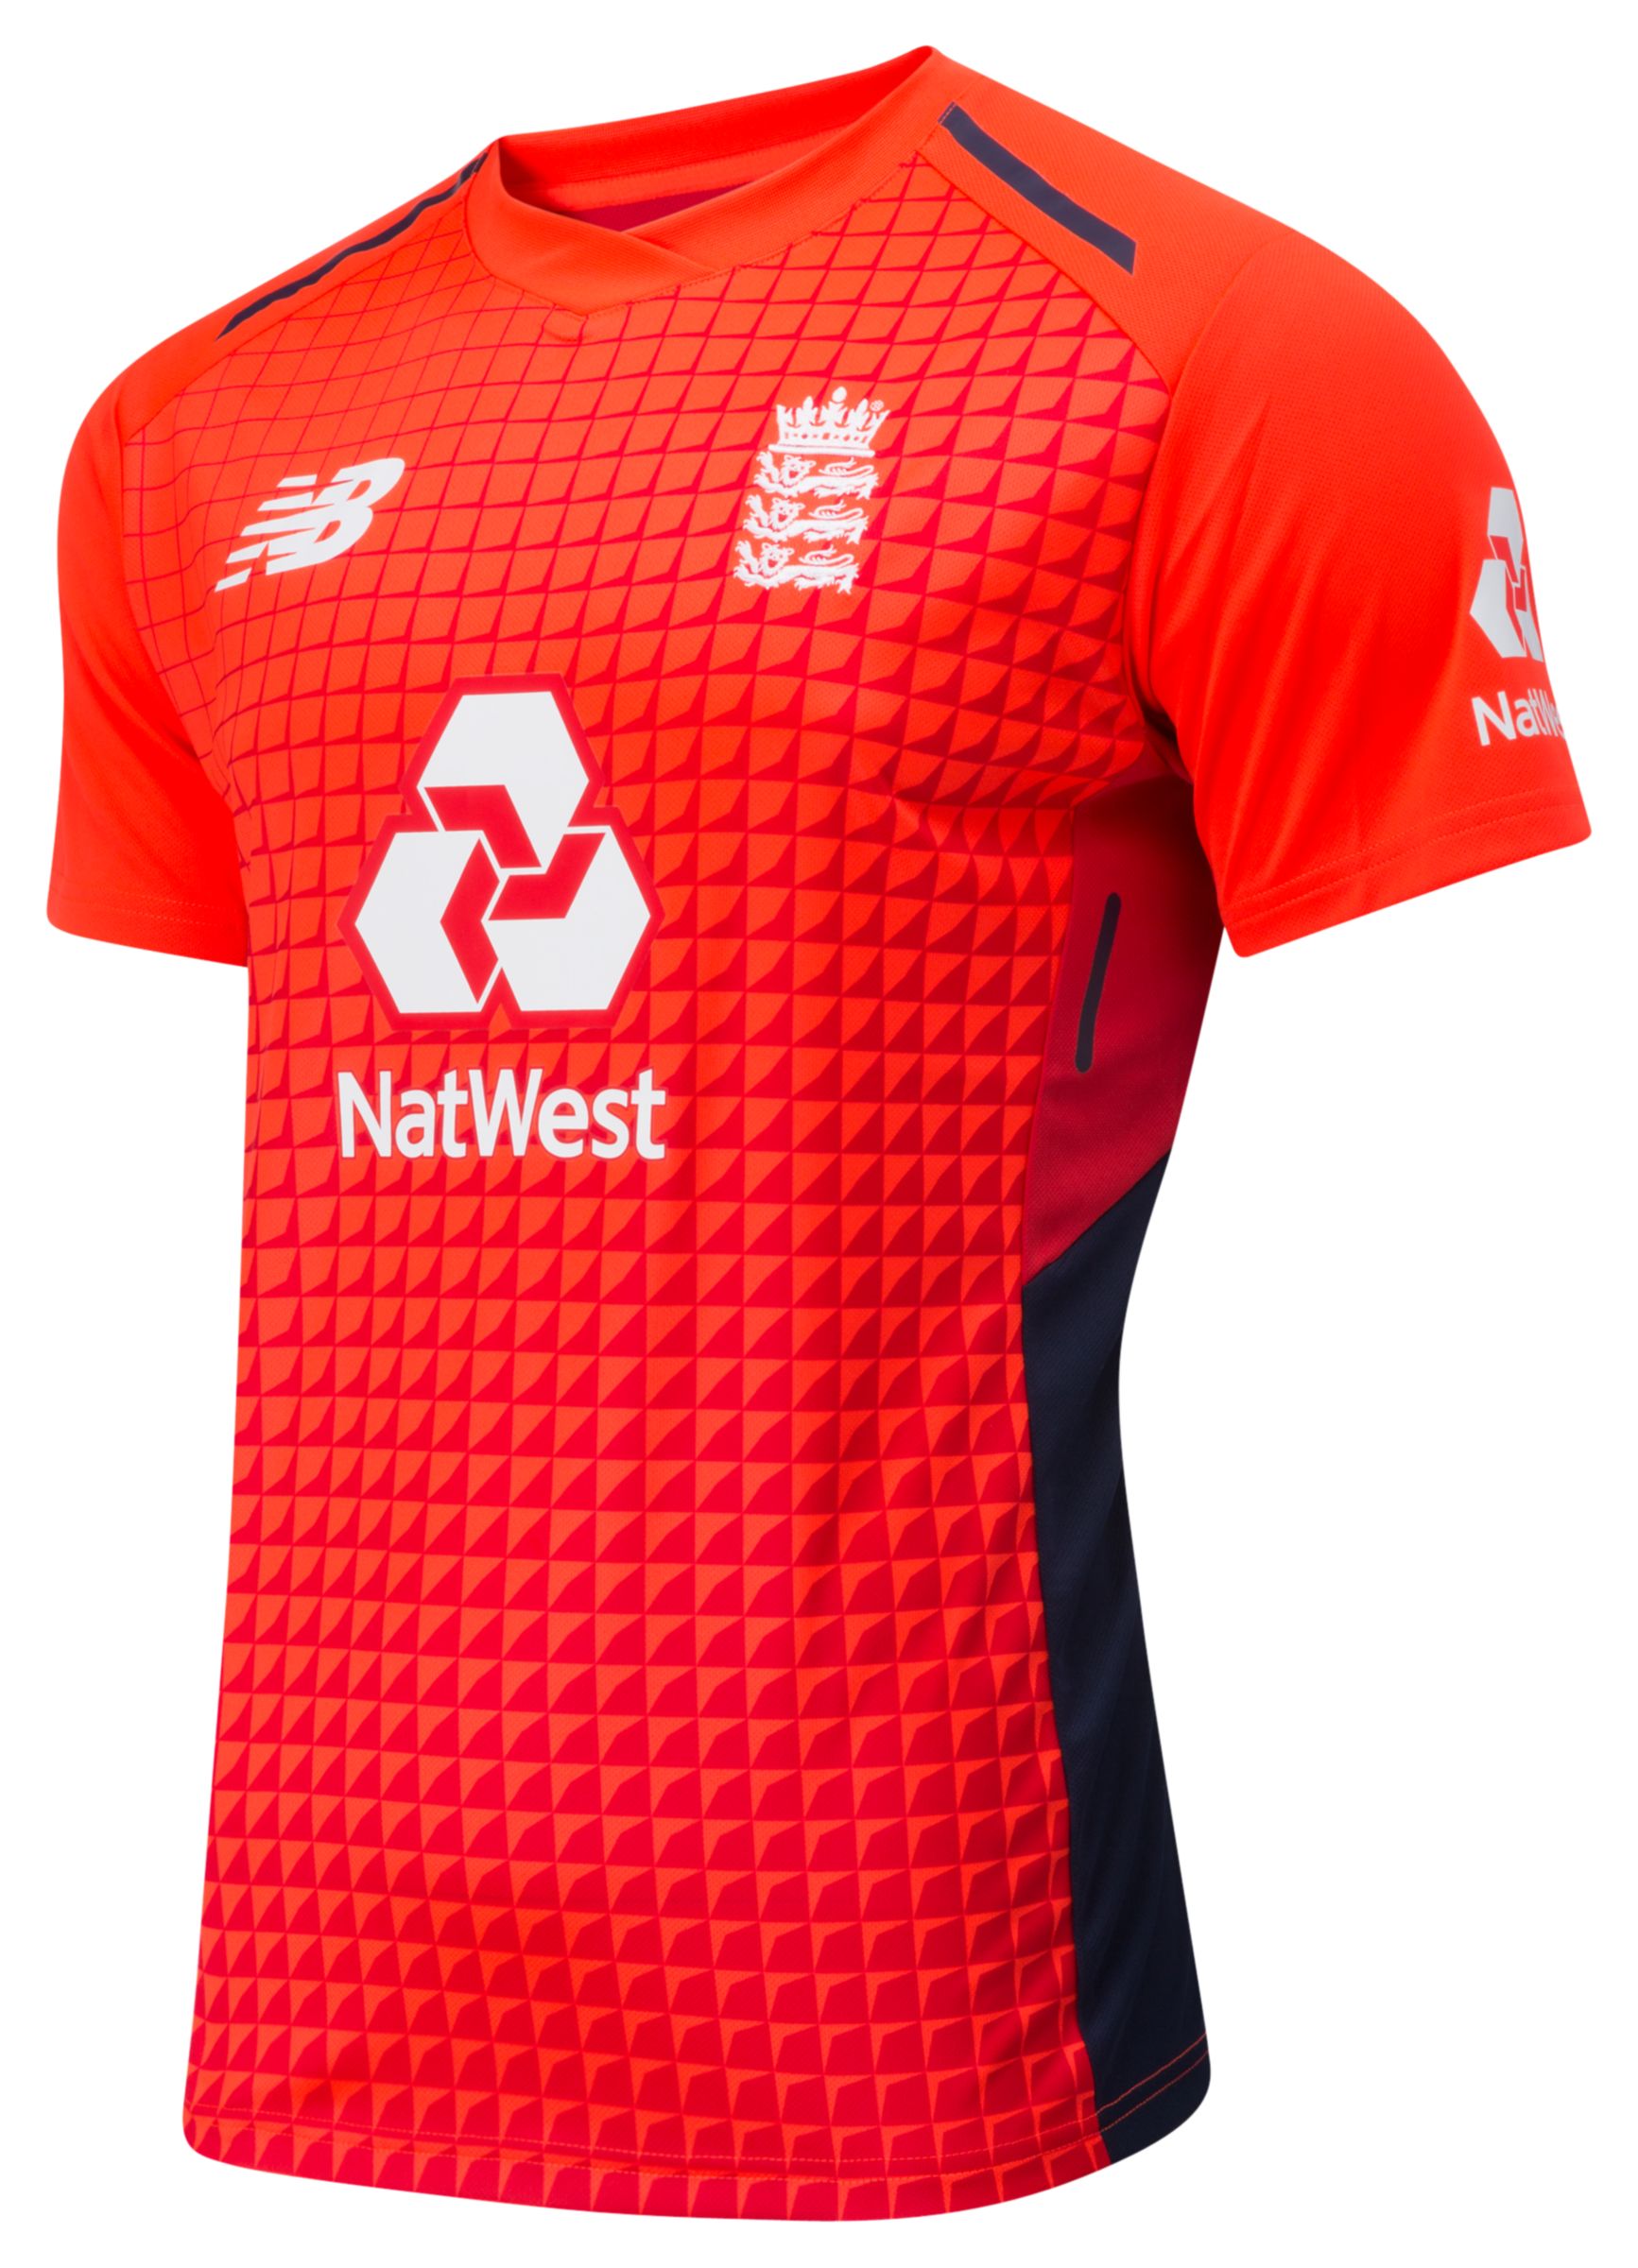 new balance england cricket jersey